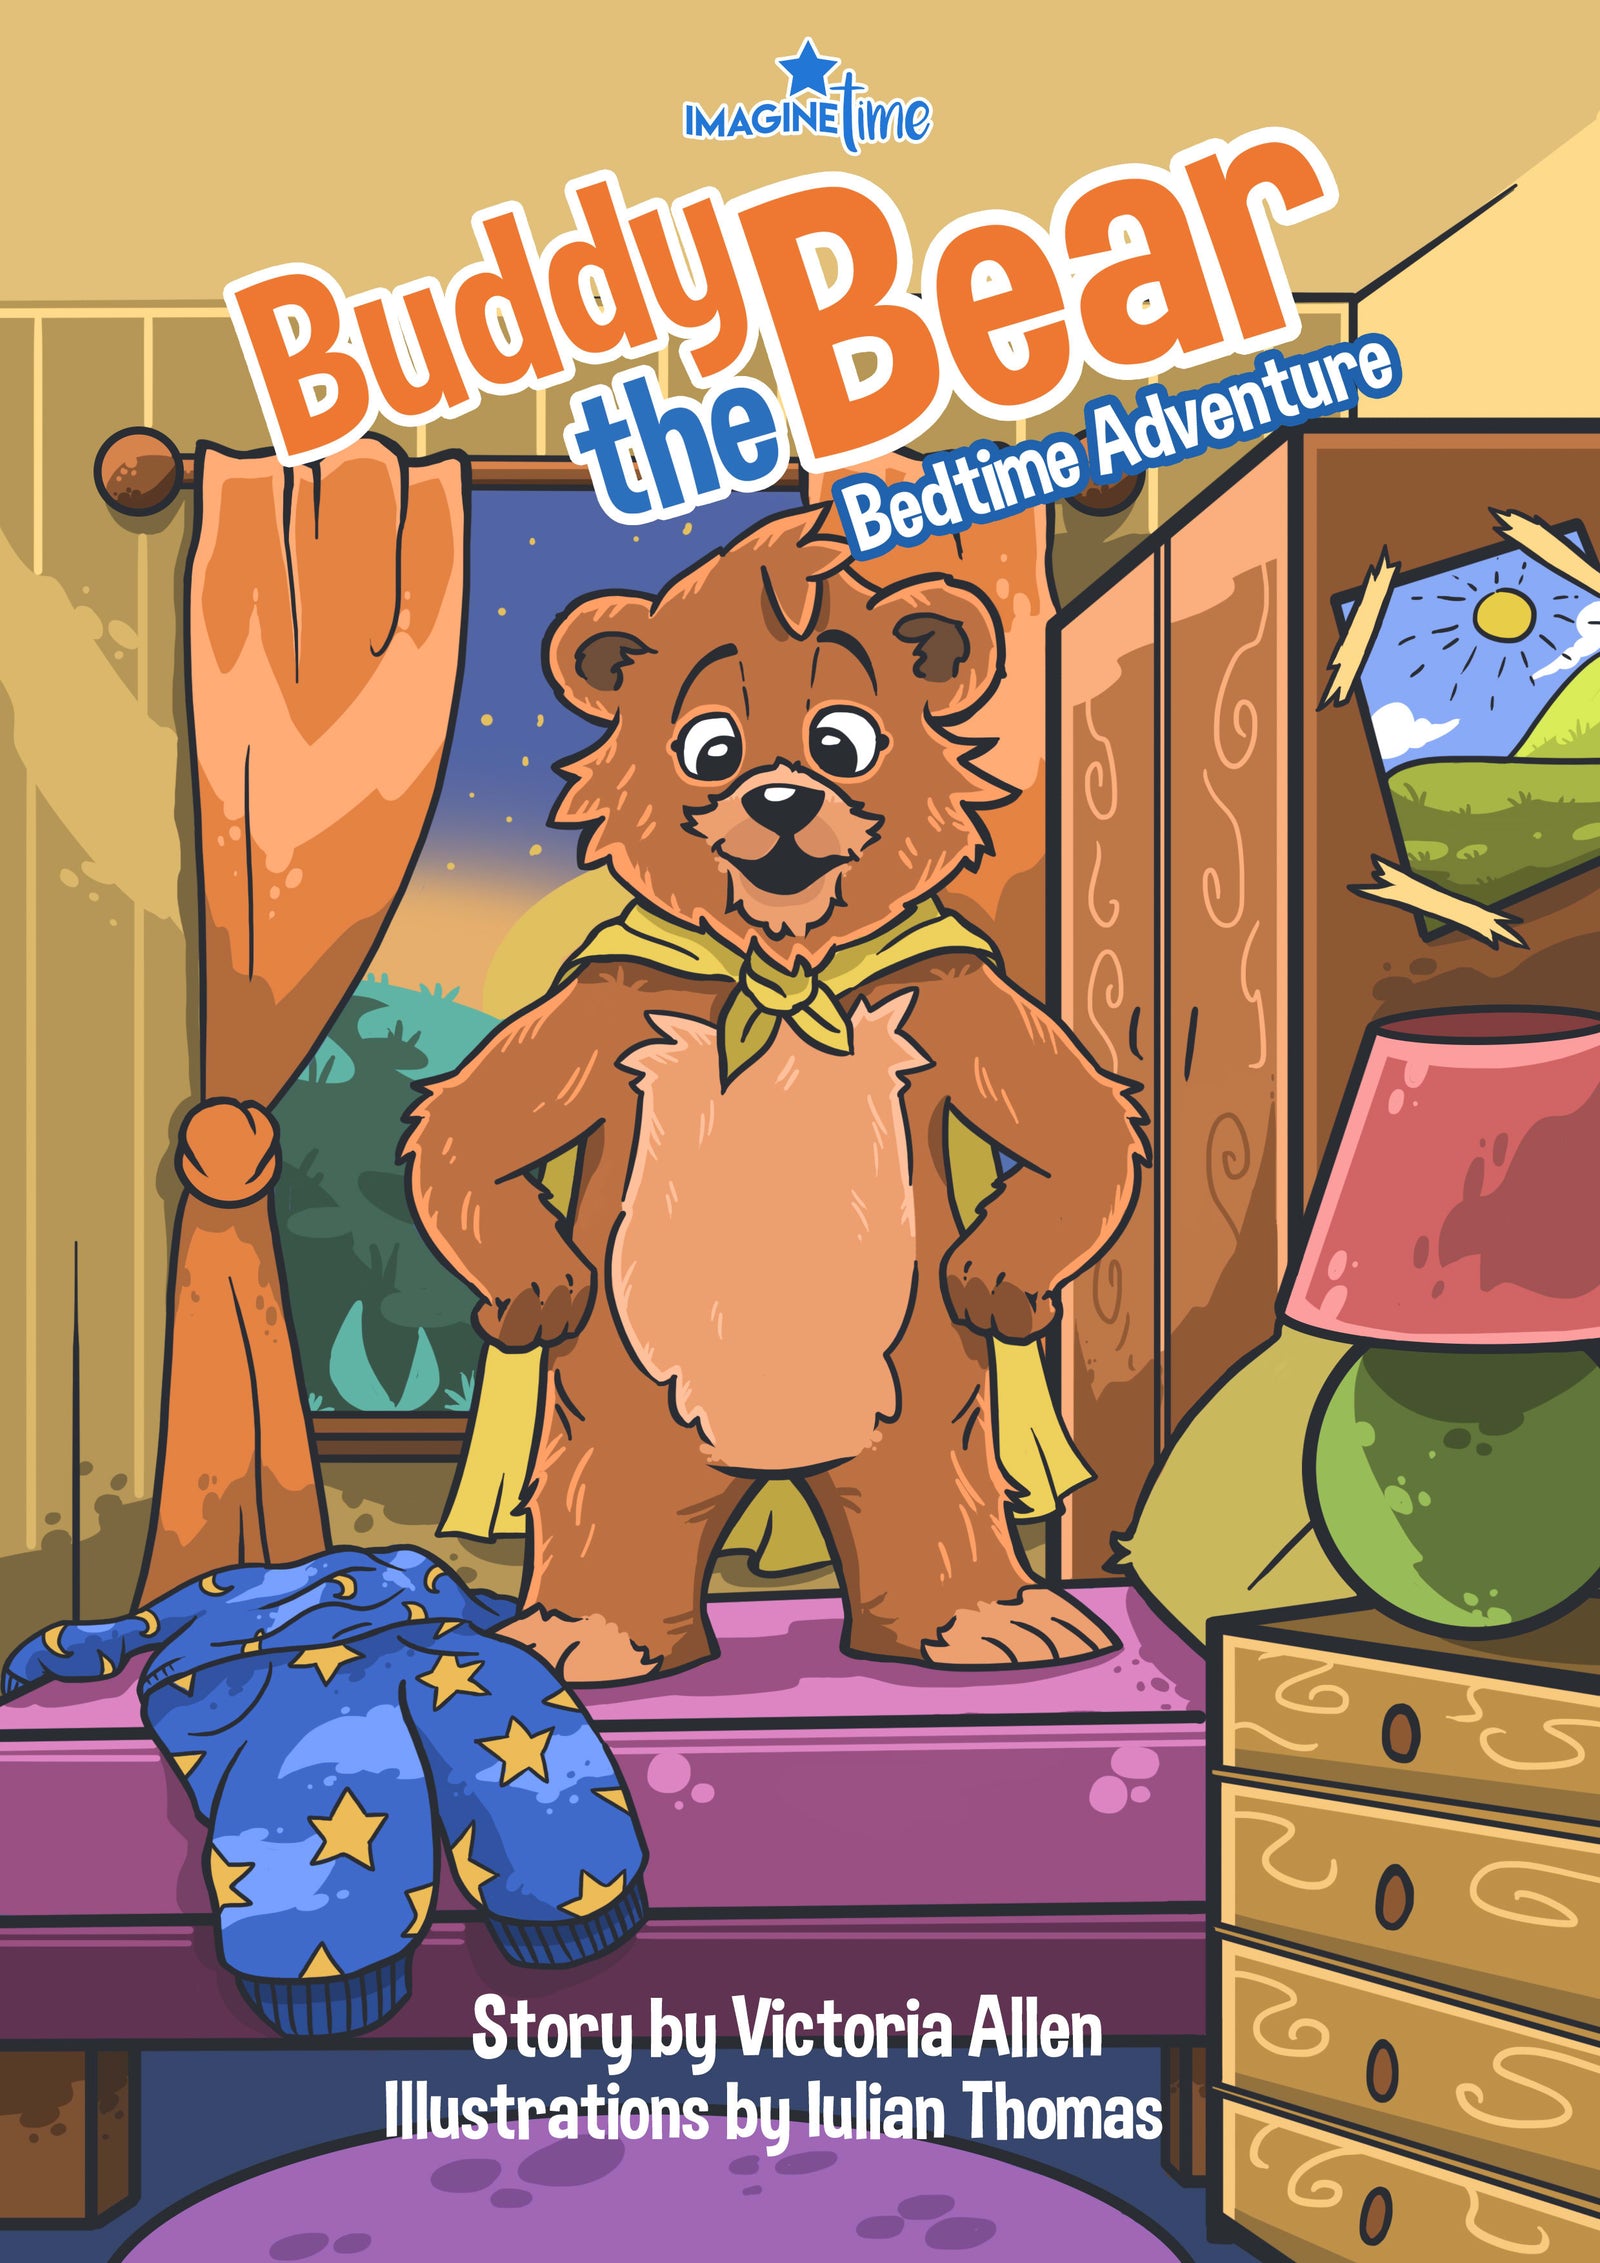 BEDTIME ADVENTURE BOOK - ImagineTime Buddy the Bear Books